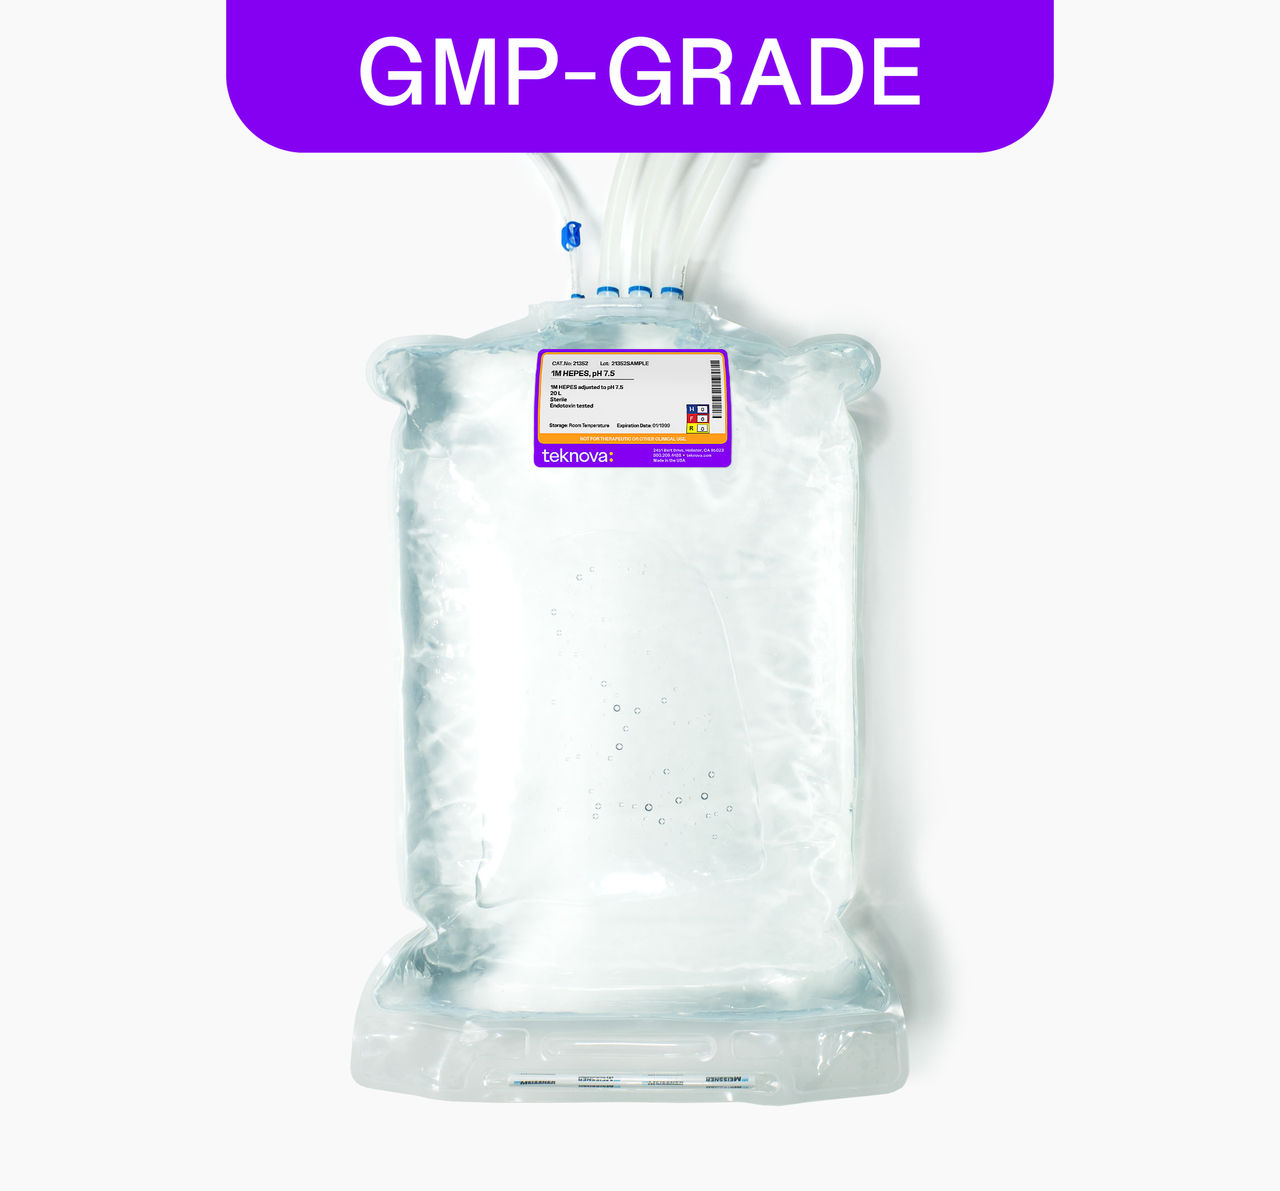 1M HEPES, pH 7.5, 20L Bag, GMP-grade